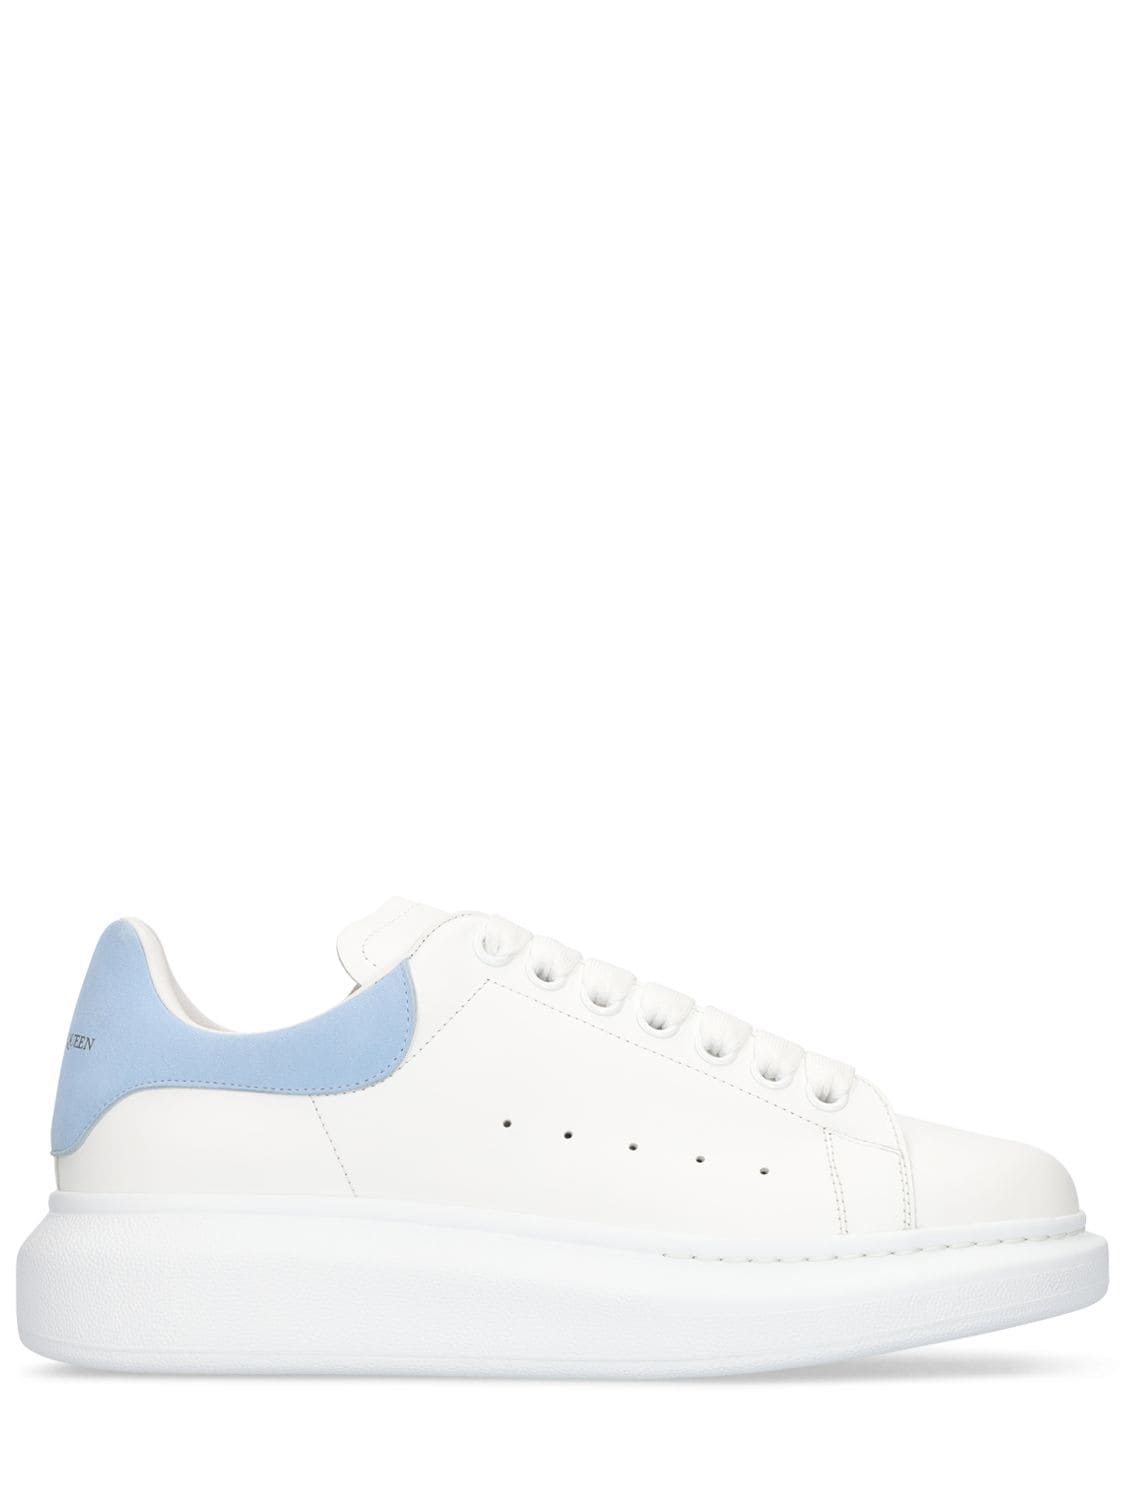 Mcqueen Sneakers In White | ModeSens